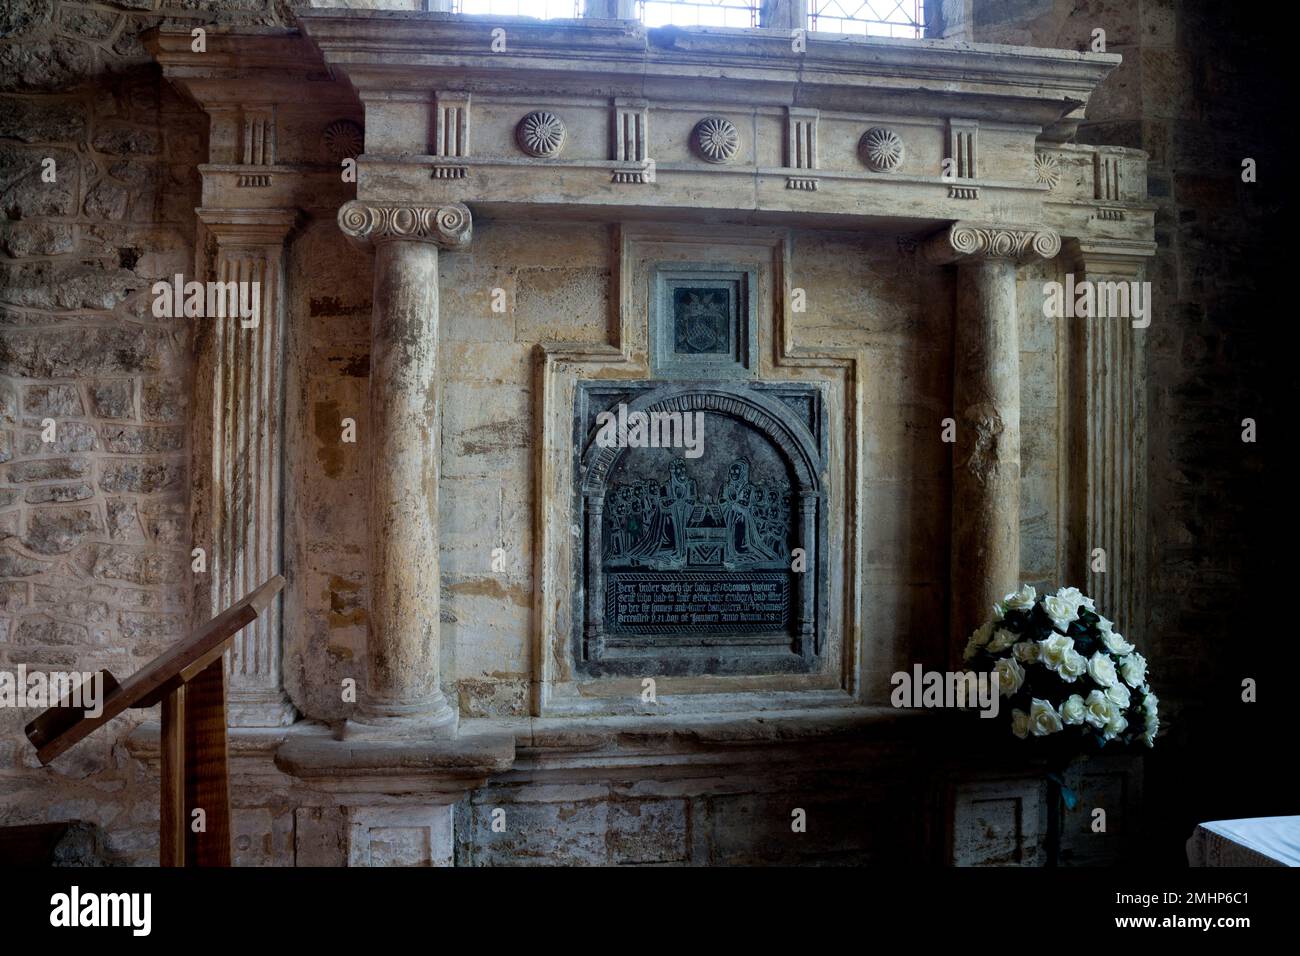 Thomas Wylmer monument, St. Mary the Virgin Church, Staverton, Northamptonshire, England, UK Stock Photo